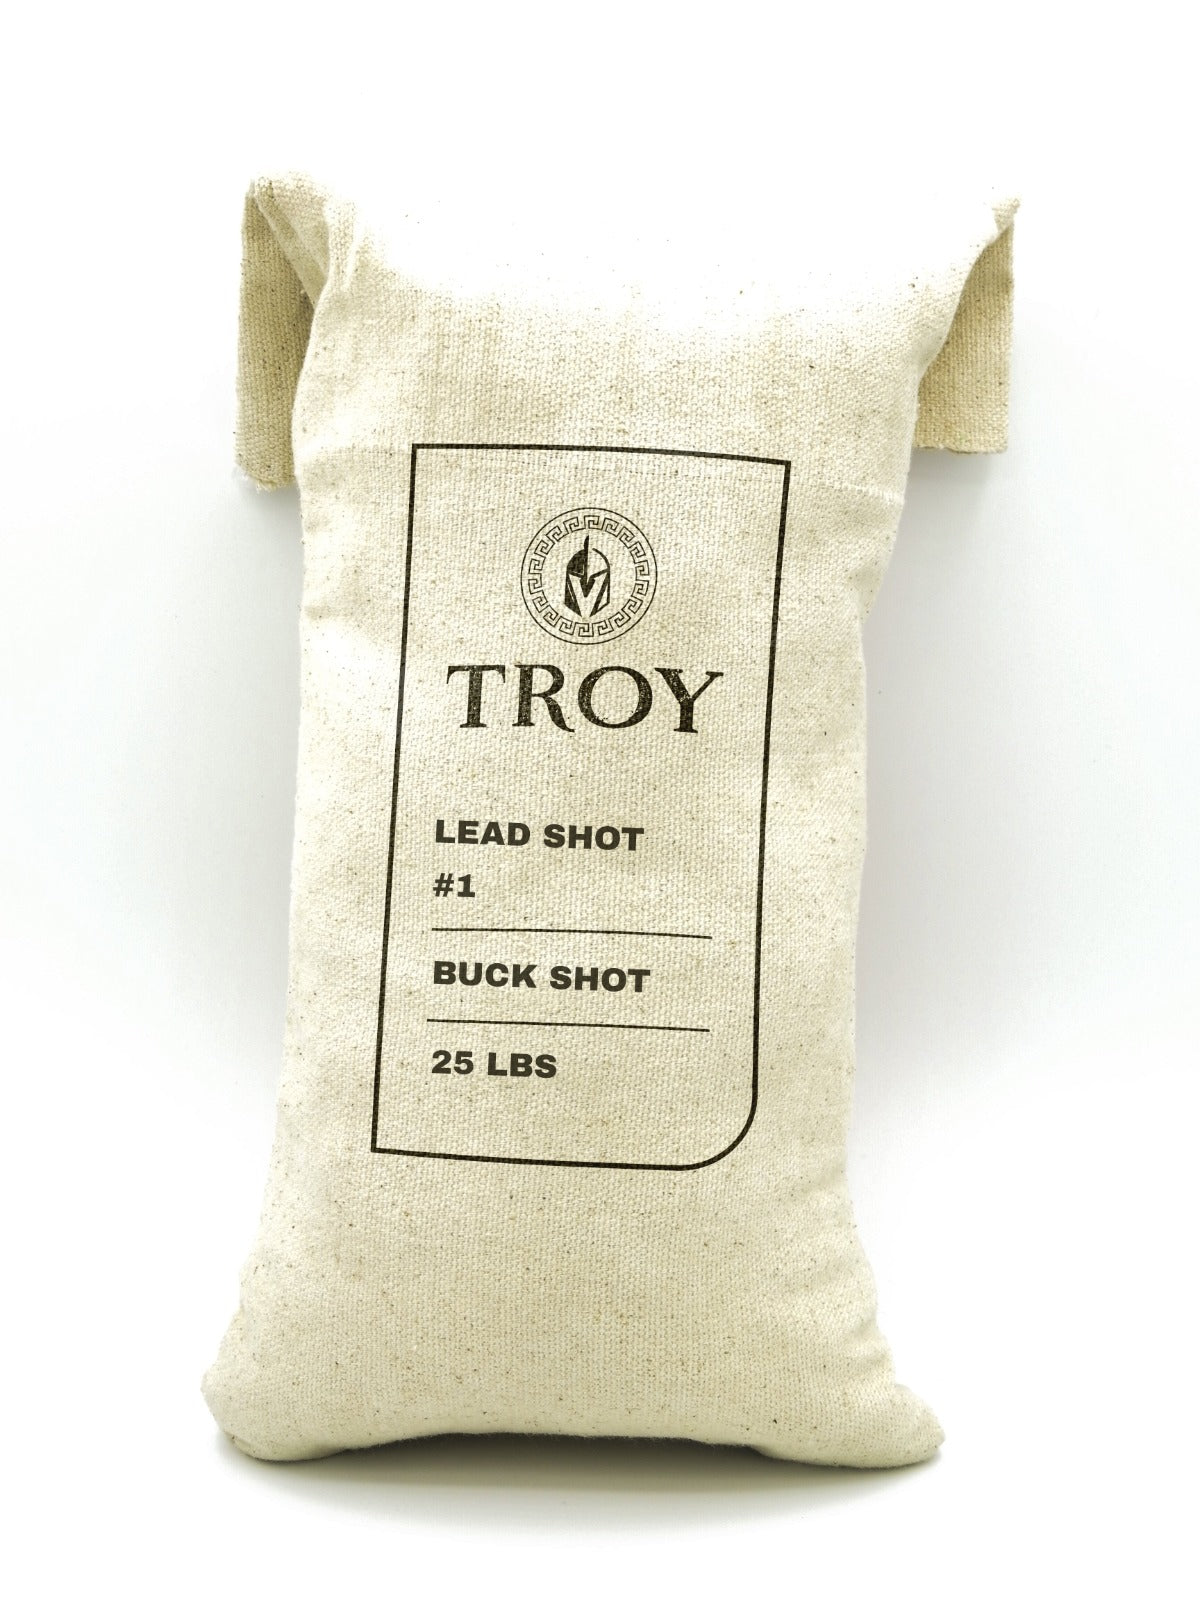 Troy Lead Shot # 1 Buck Shot 25 Lbs / bag